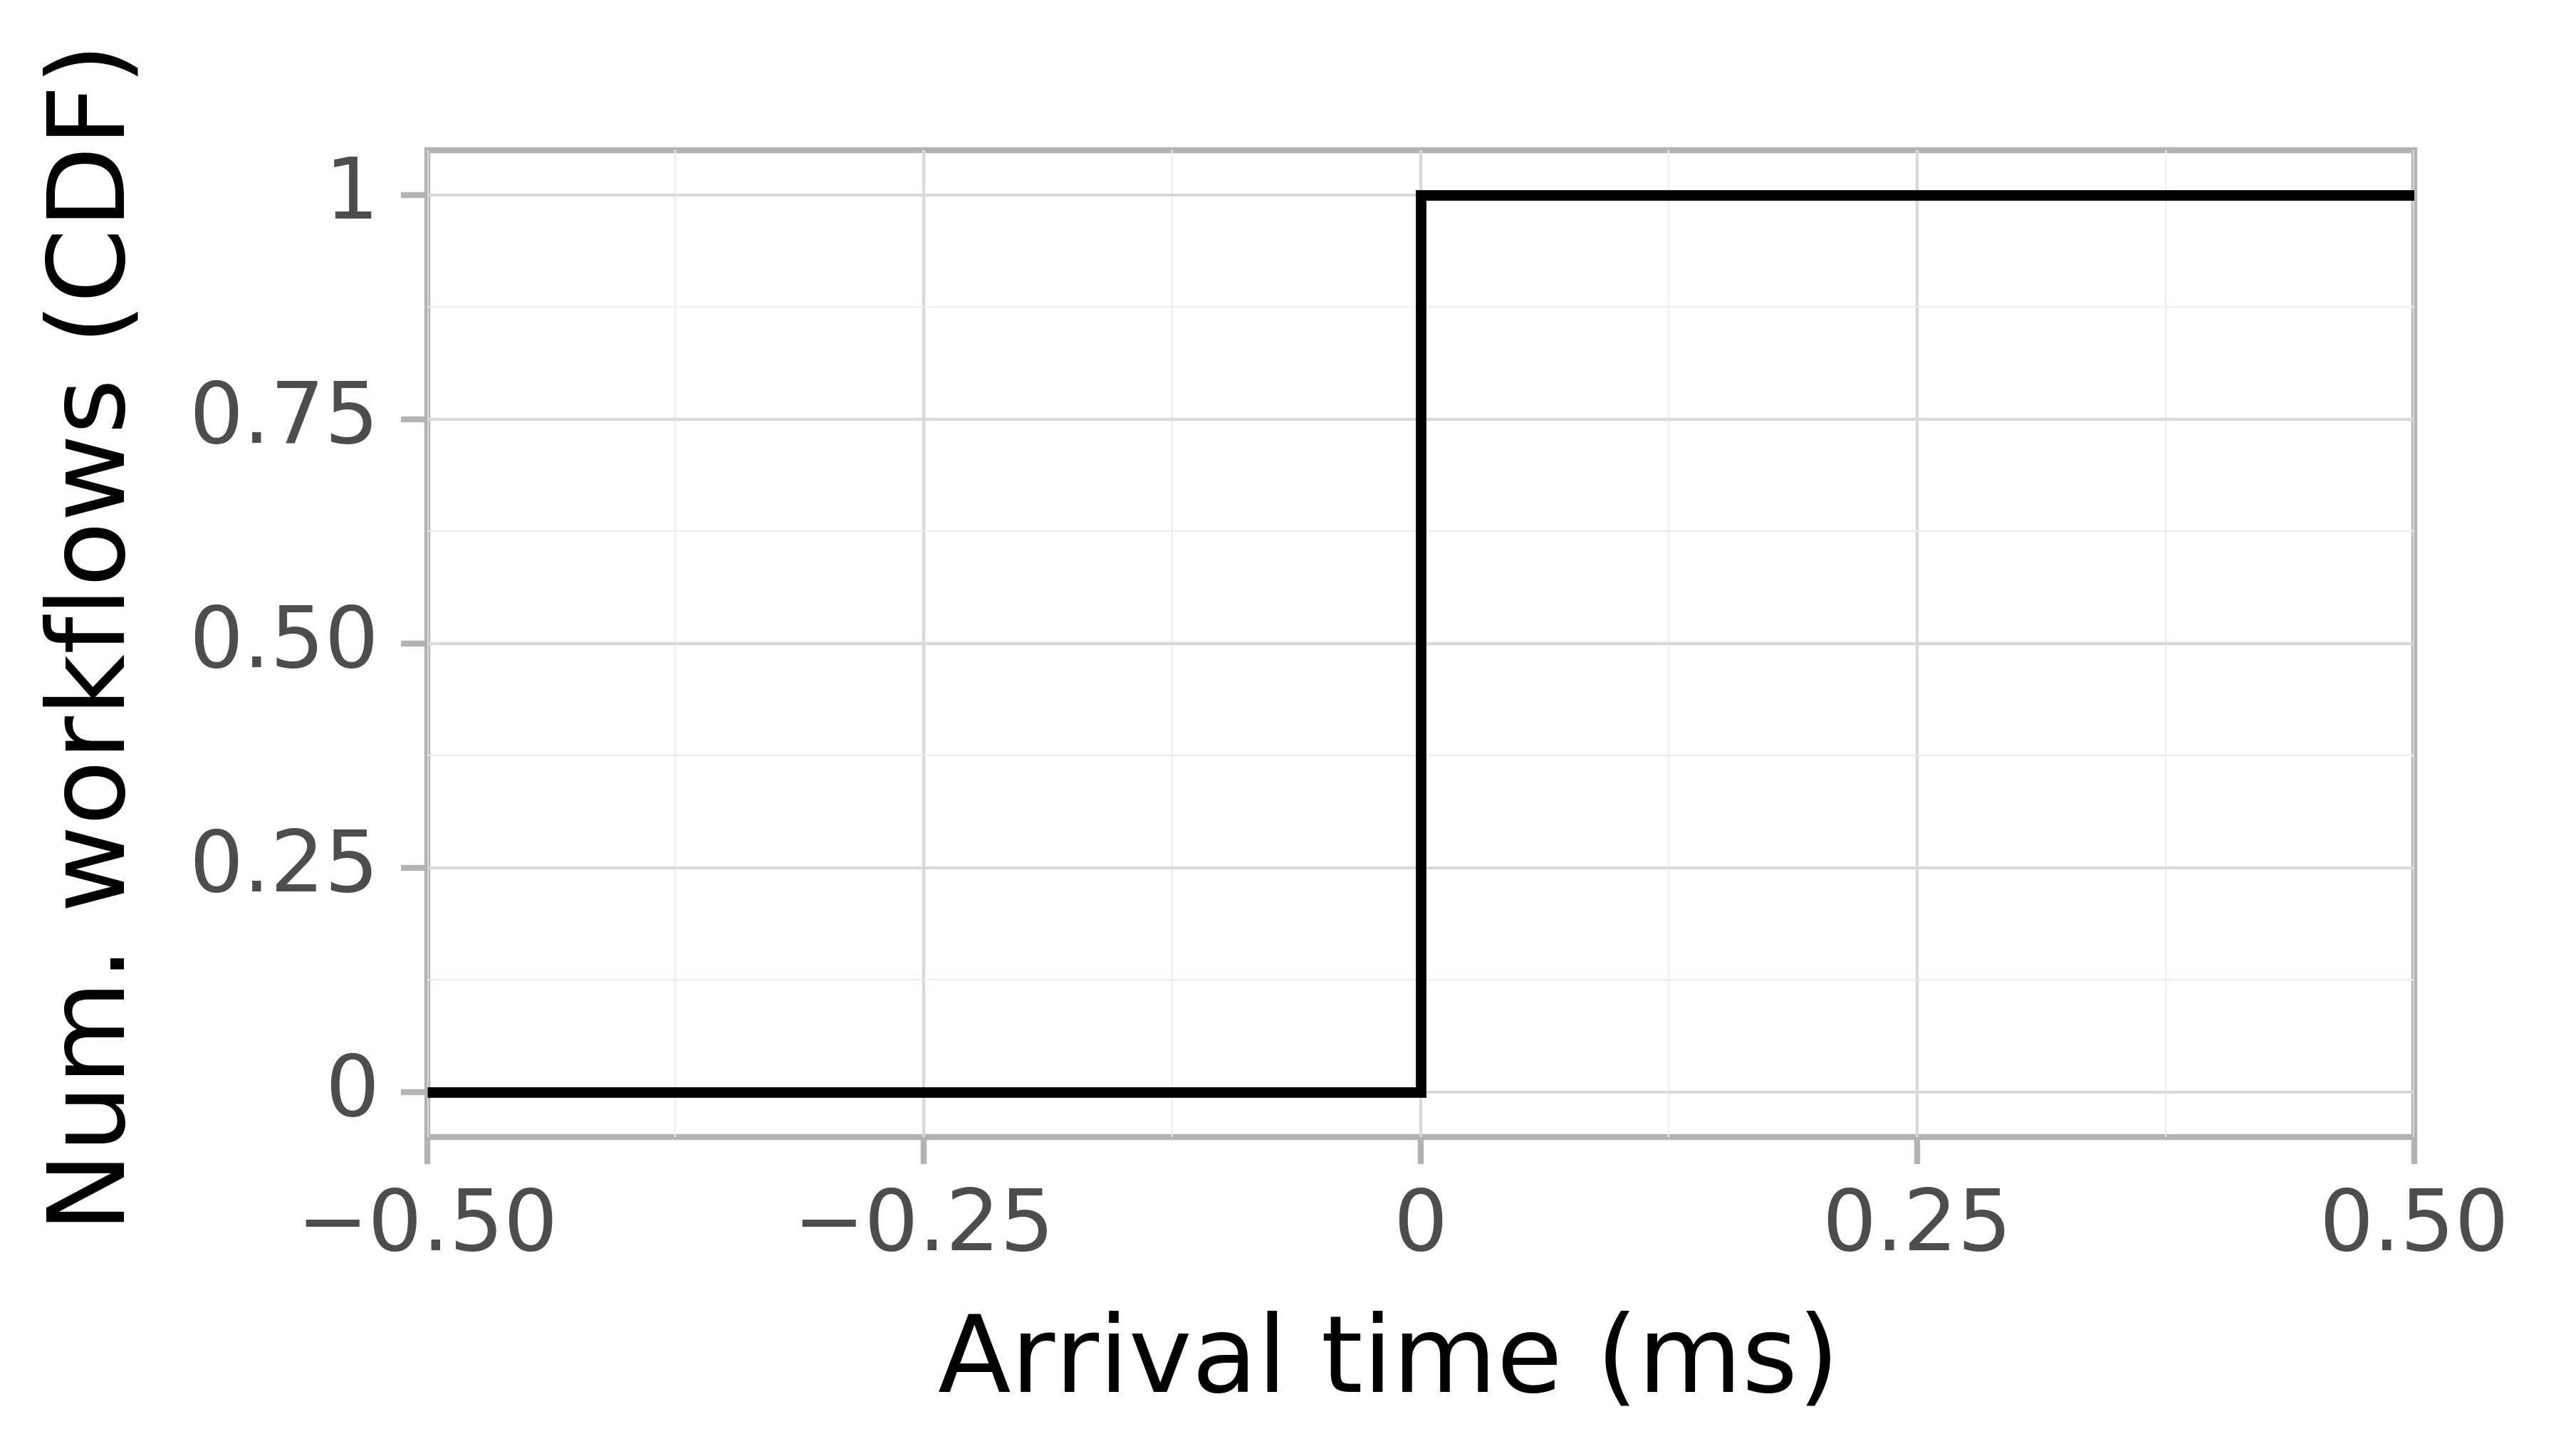 Job arrival CDF graph for the spec_trace-2 trace.